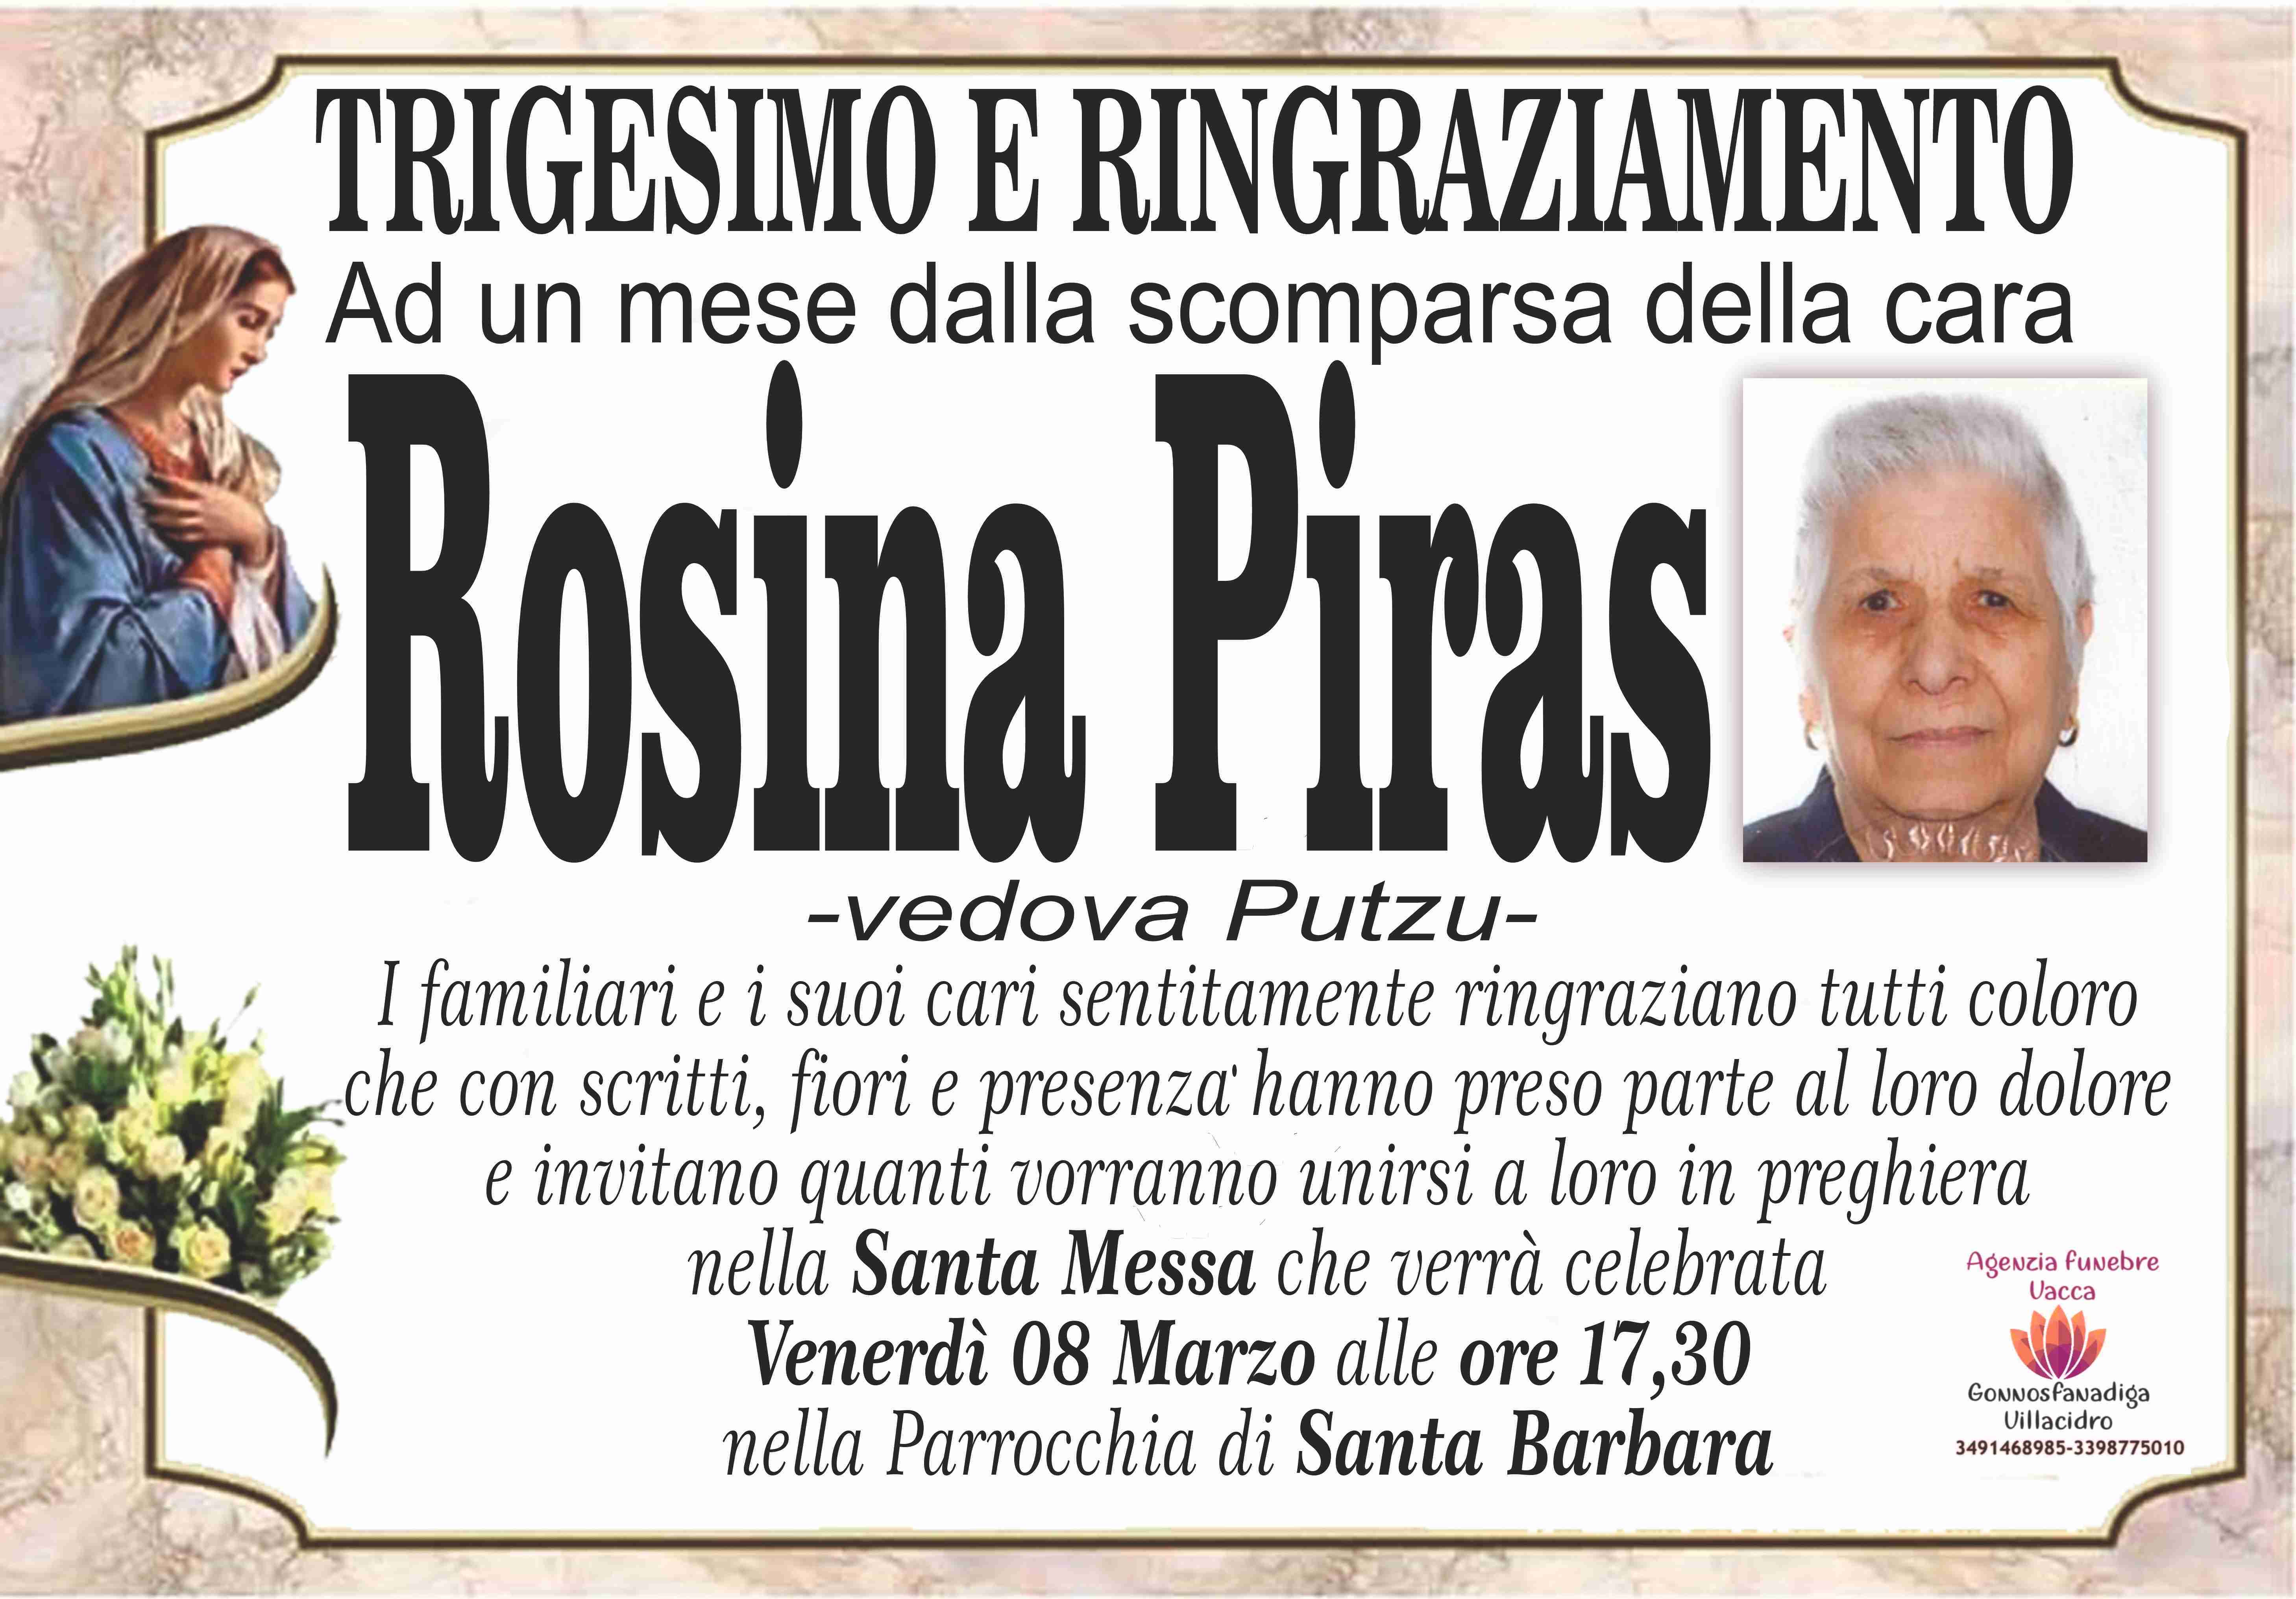 Rosina Piras